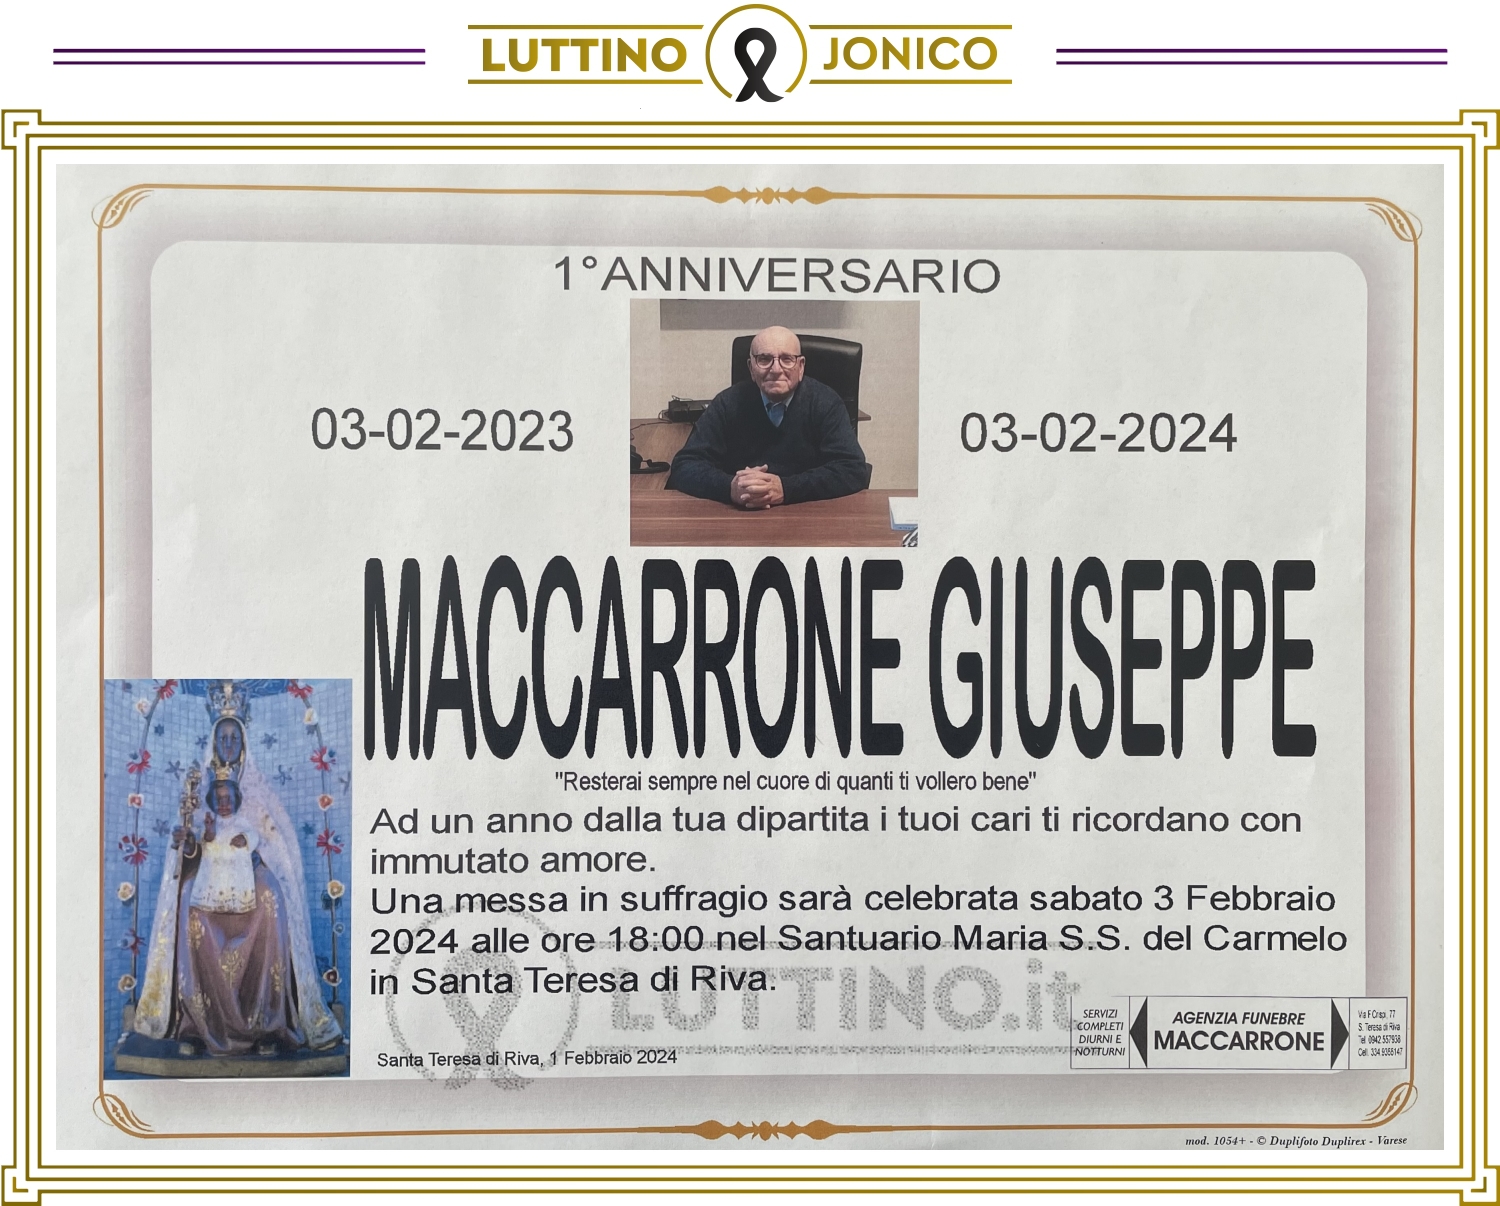 Giuseppe Maccarrone